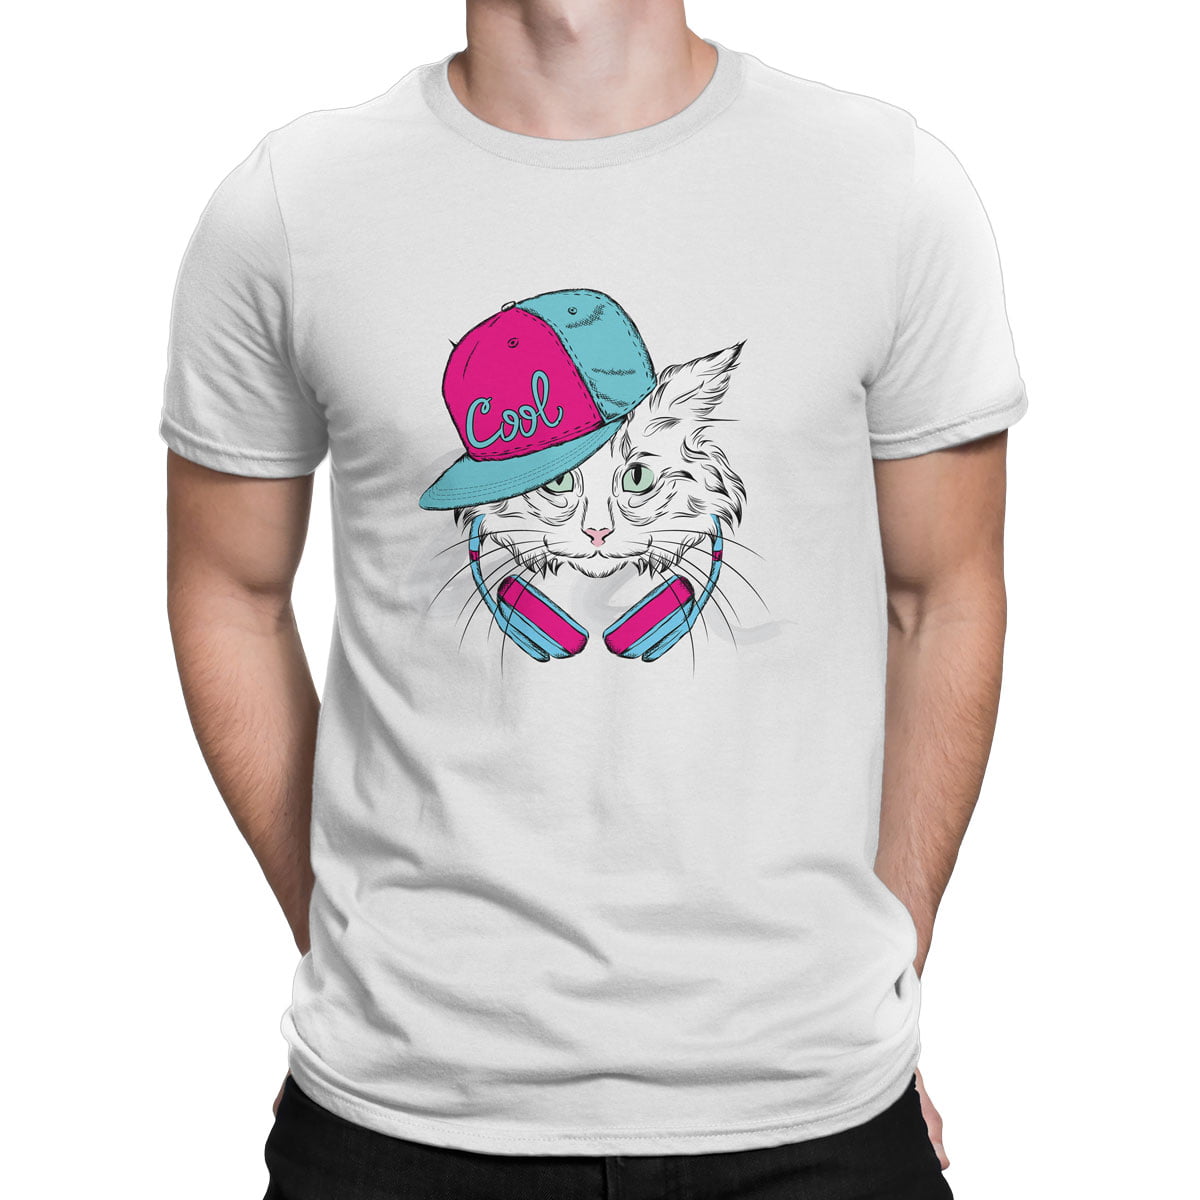 Dj cool kedi tisort erkek b - cool dj kedi tasarımlı t-shirt - figurex